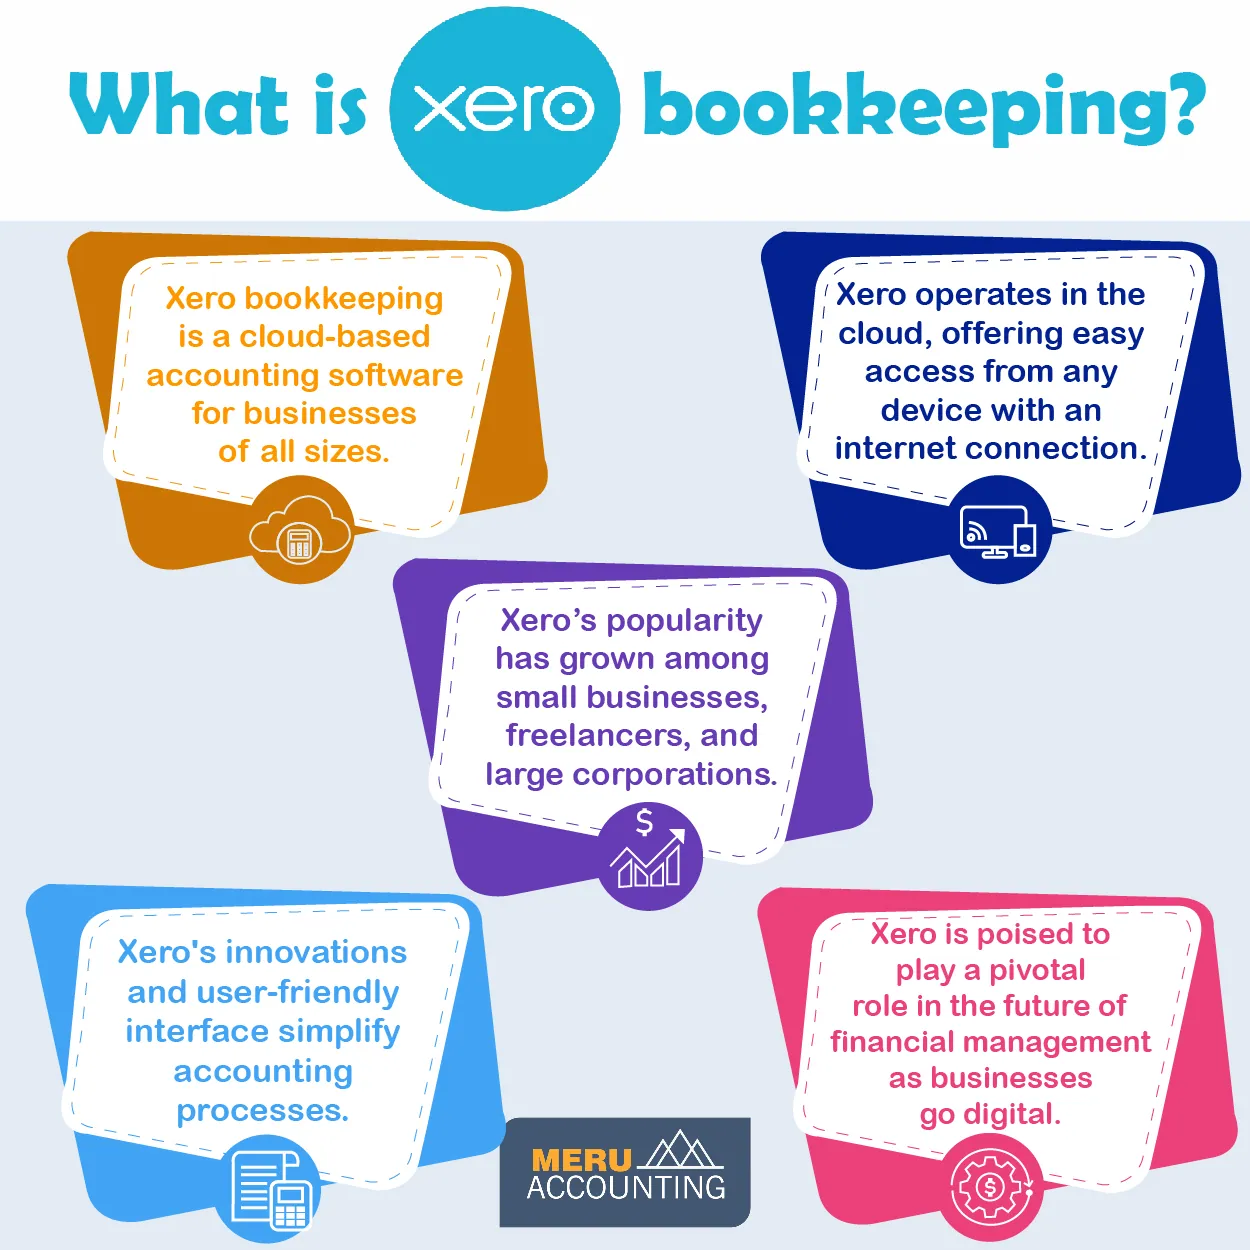 xero bookkeeping